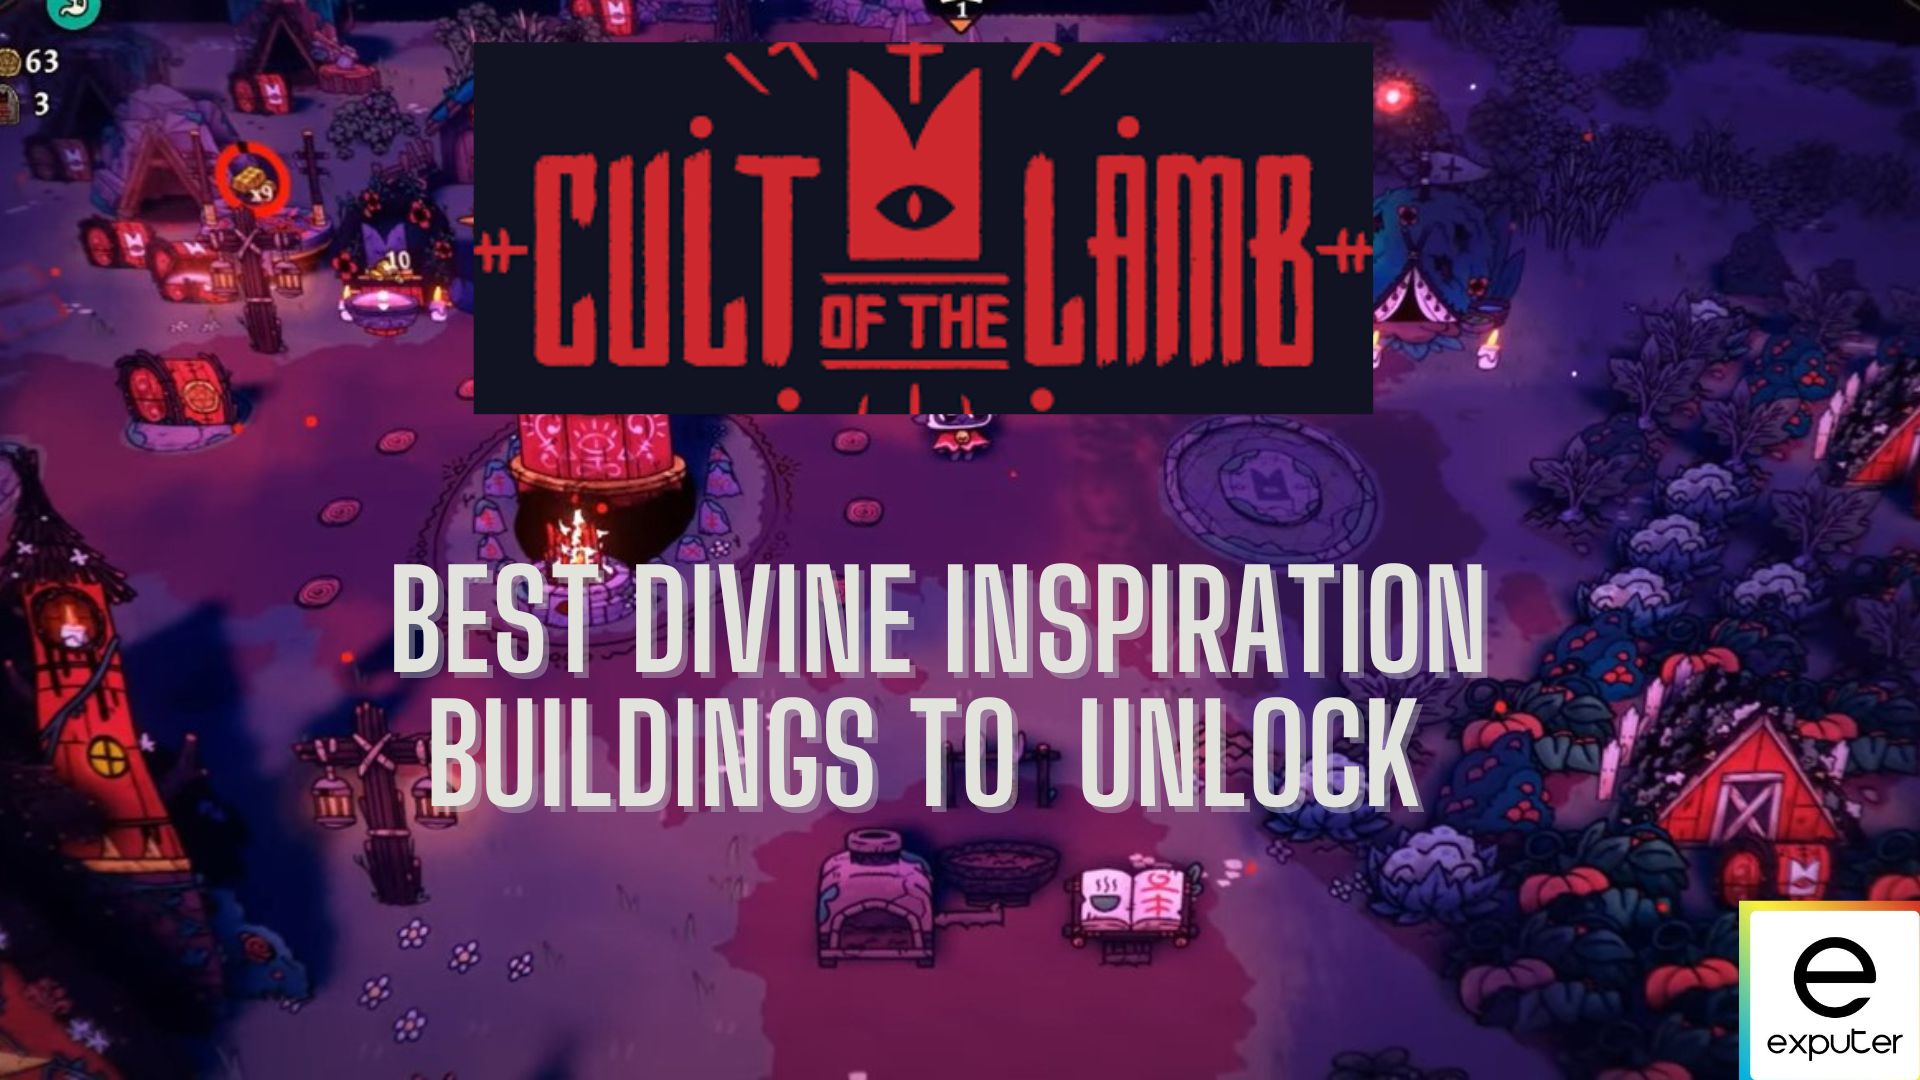 Cult of the Lamb best divine inspiration